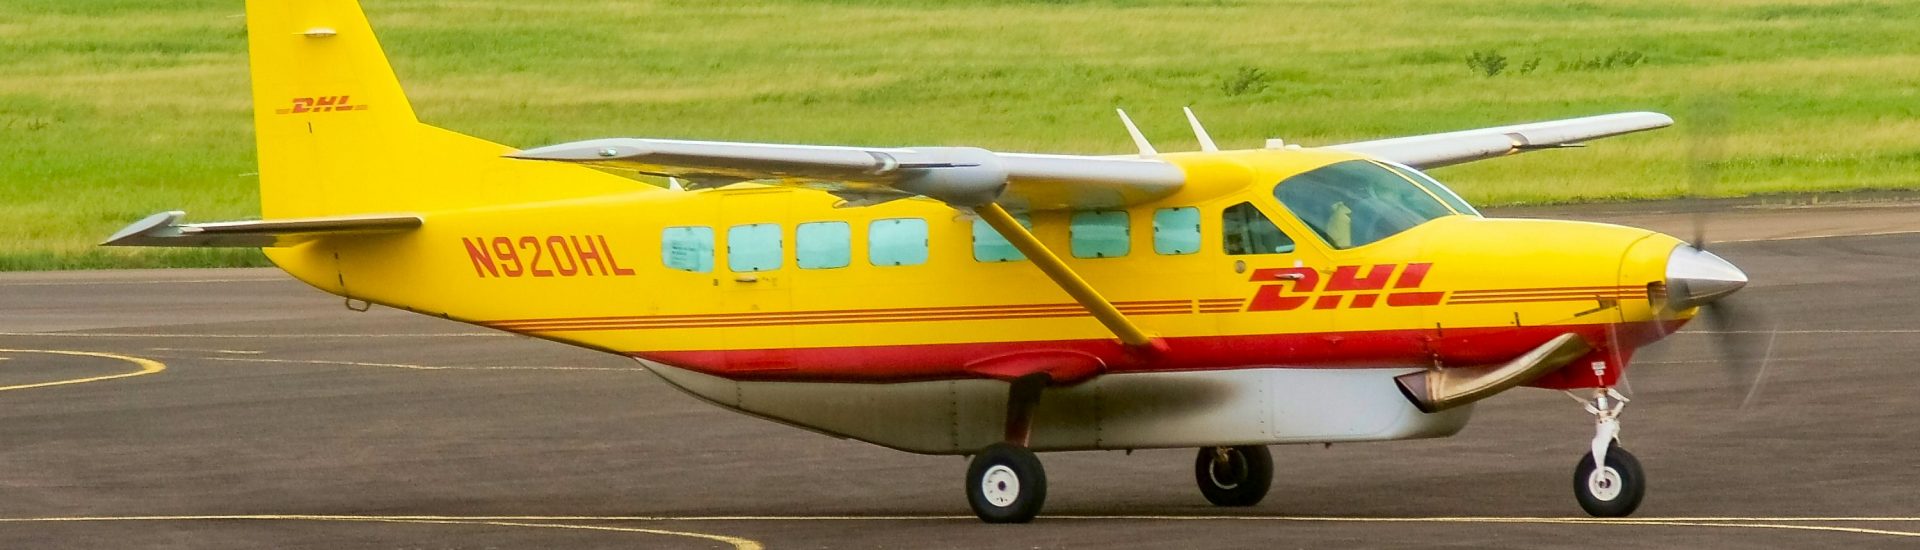 Cessna 208B DHL N920HL